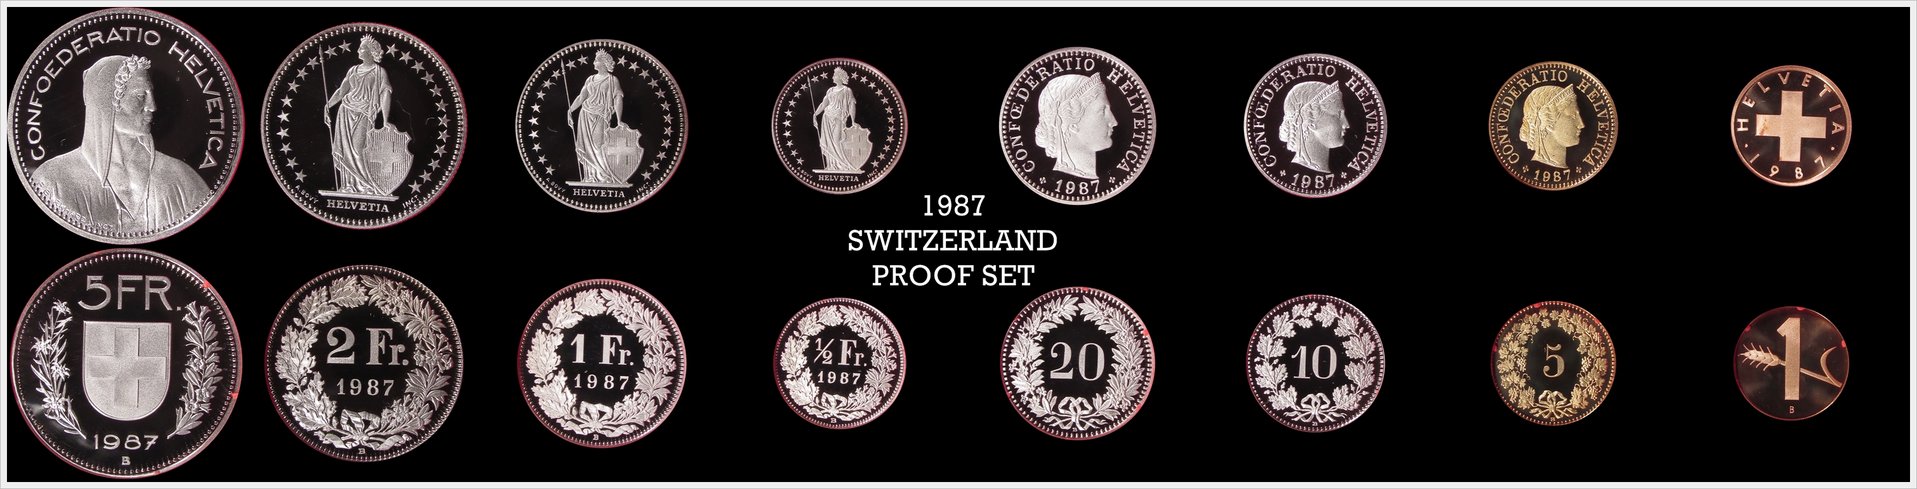 1987 Switzerland Proof Set.jpg